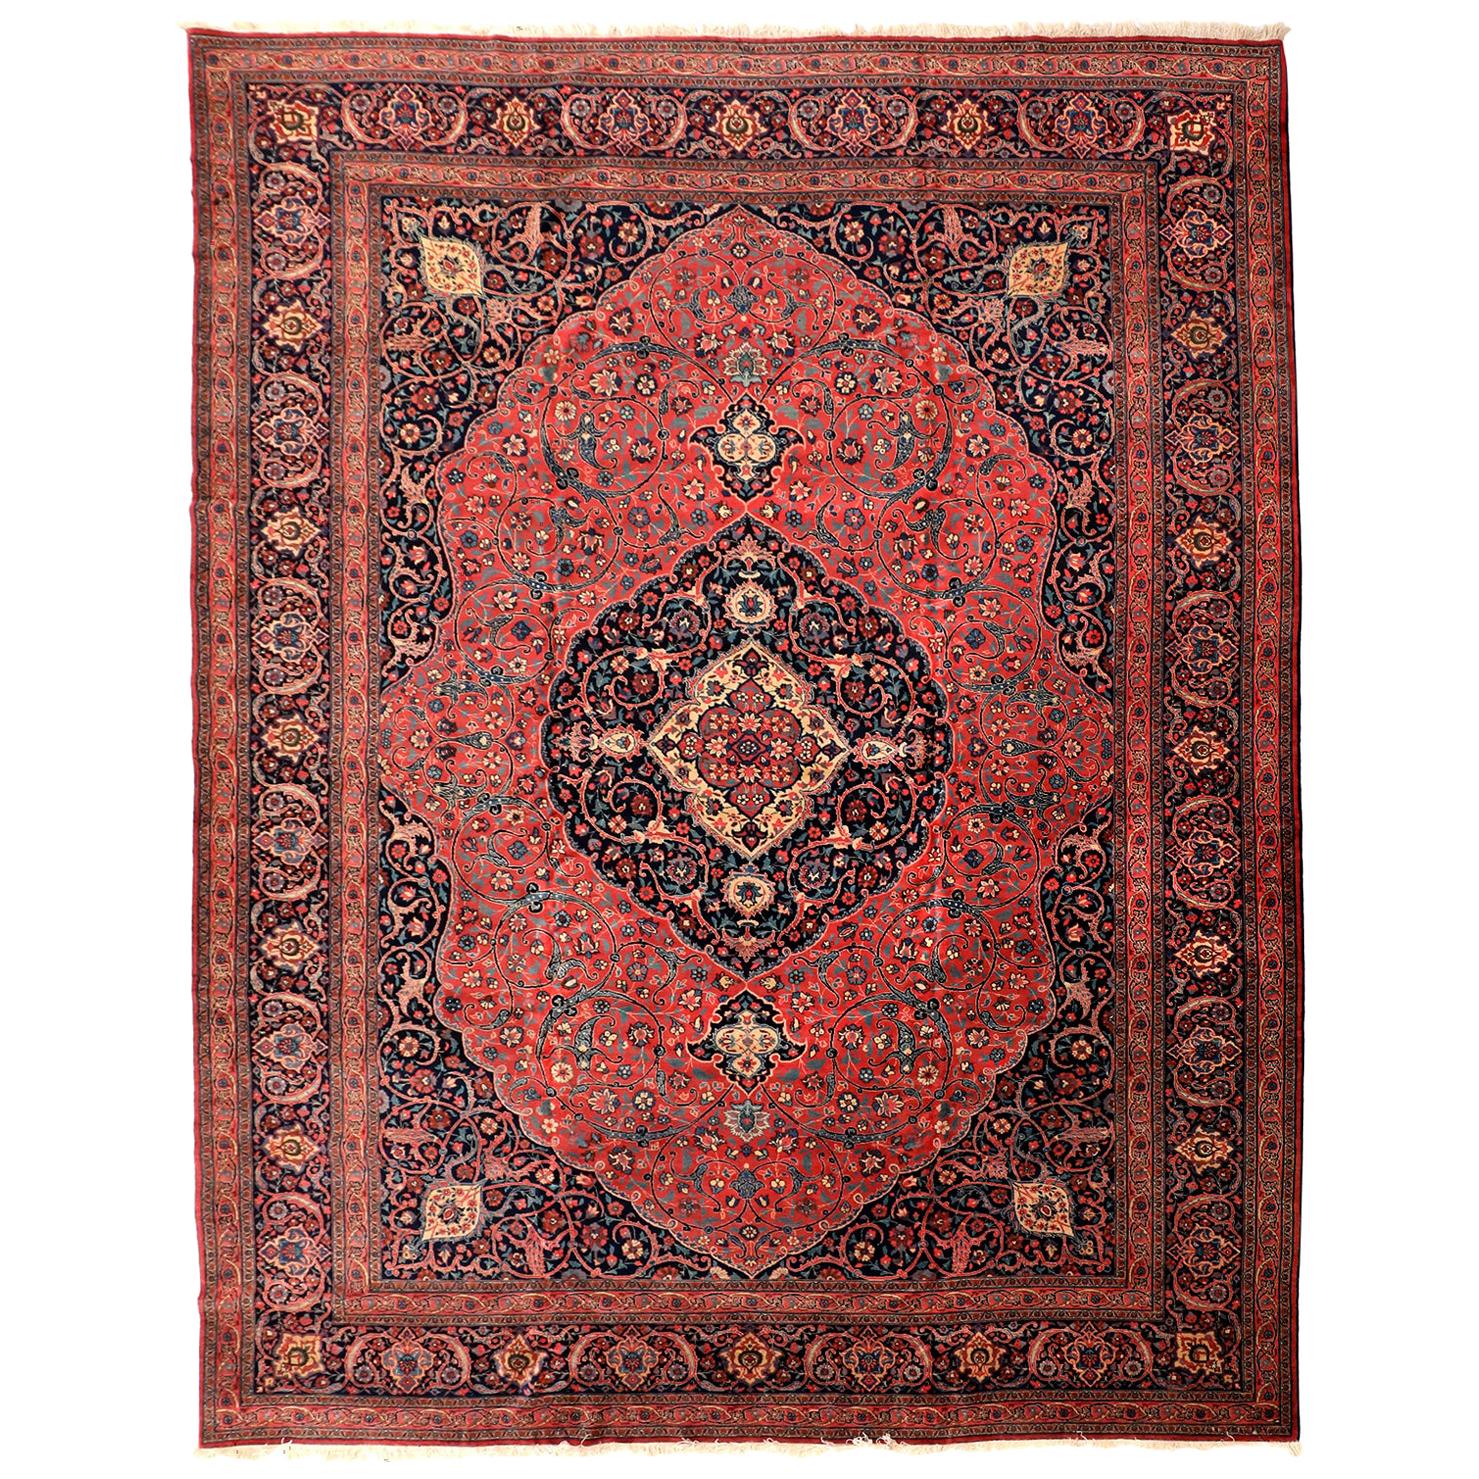 Antique 1920s Persian Tabriz Rug, Red & Indigo, 11x15